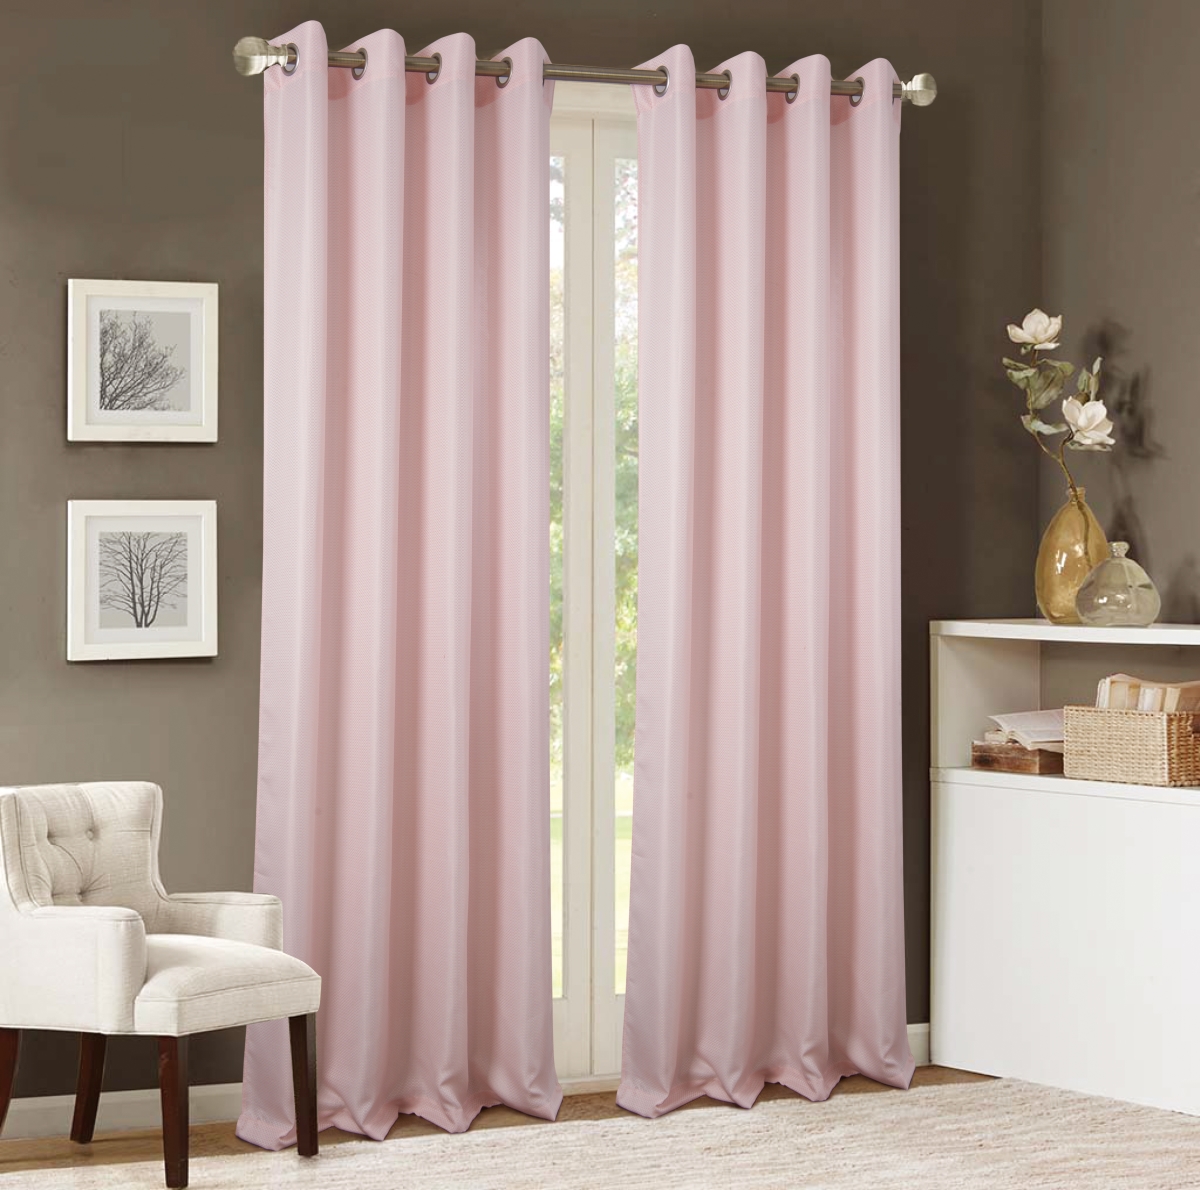 Pna228103 54 X 90 In. Akron Textured Jacquard Single Grommet Curtain Panel, Blush